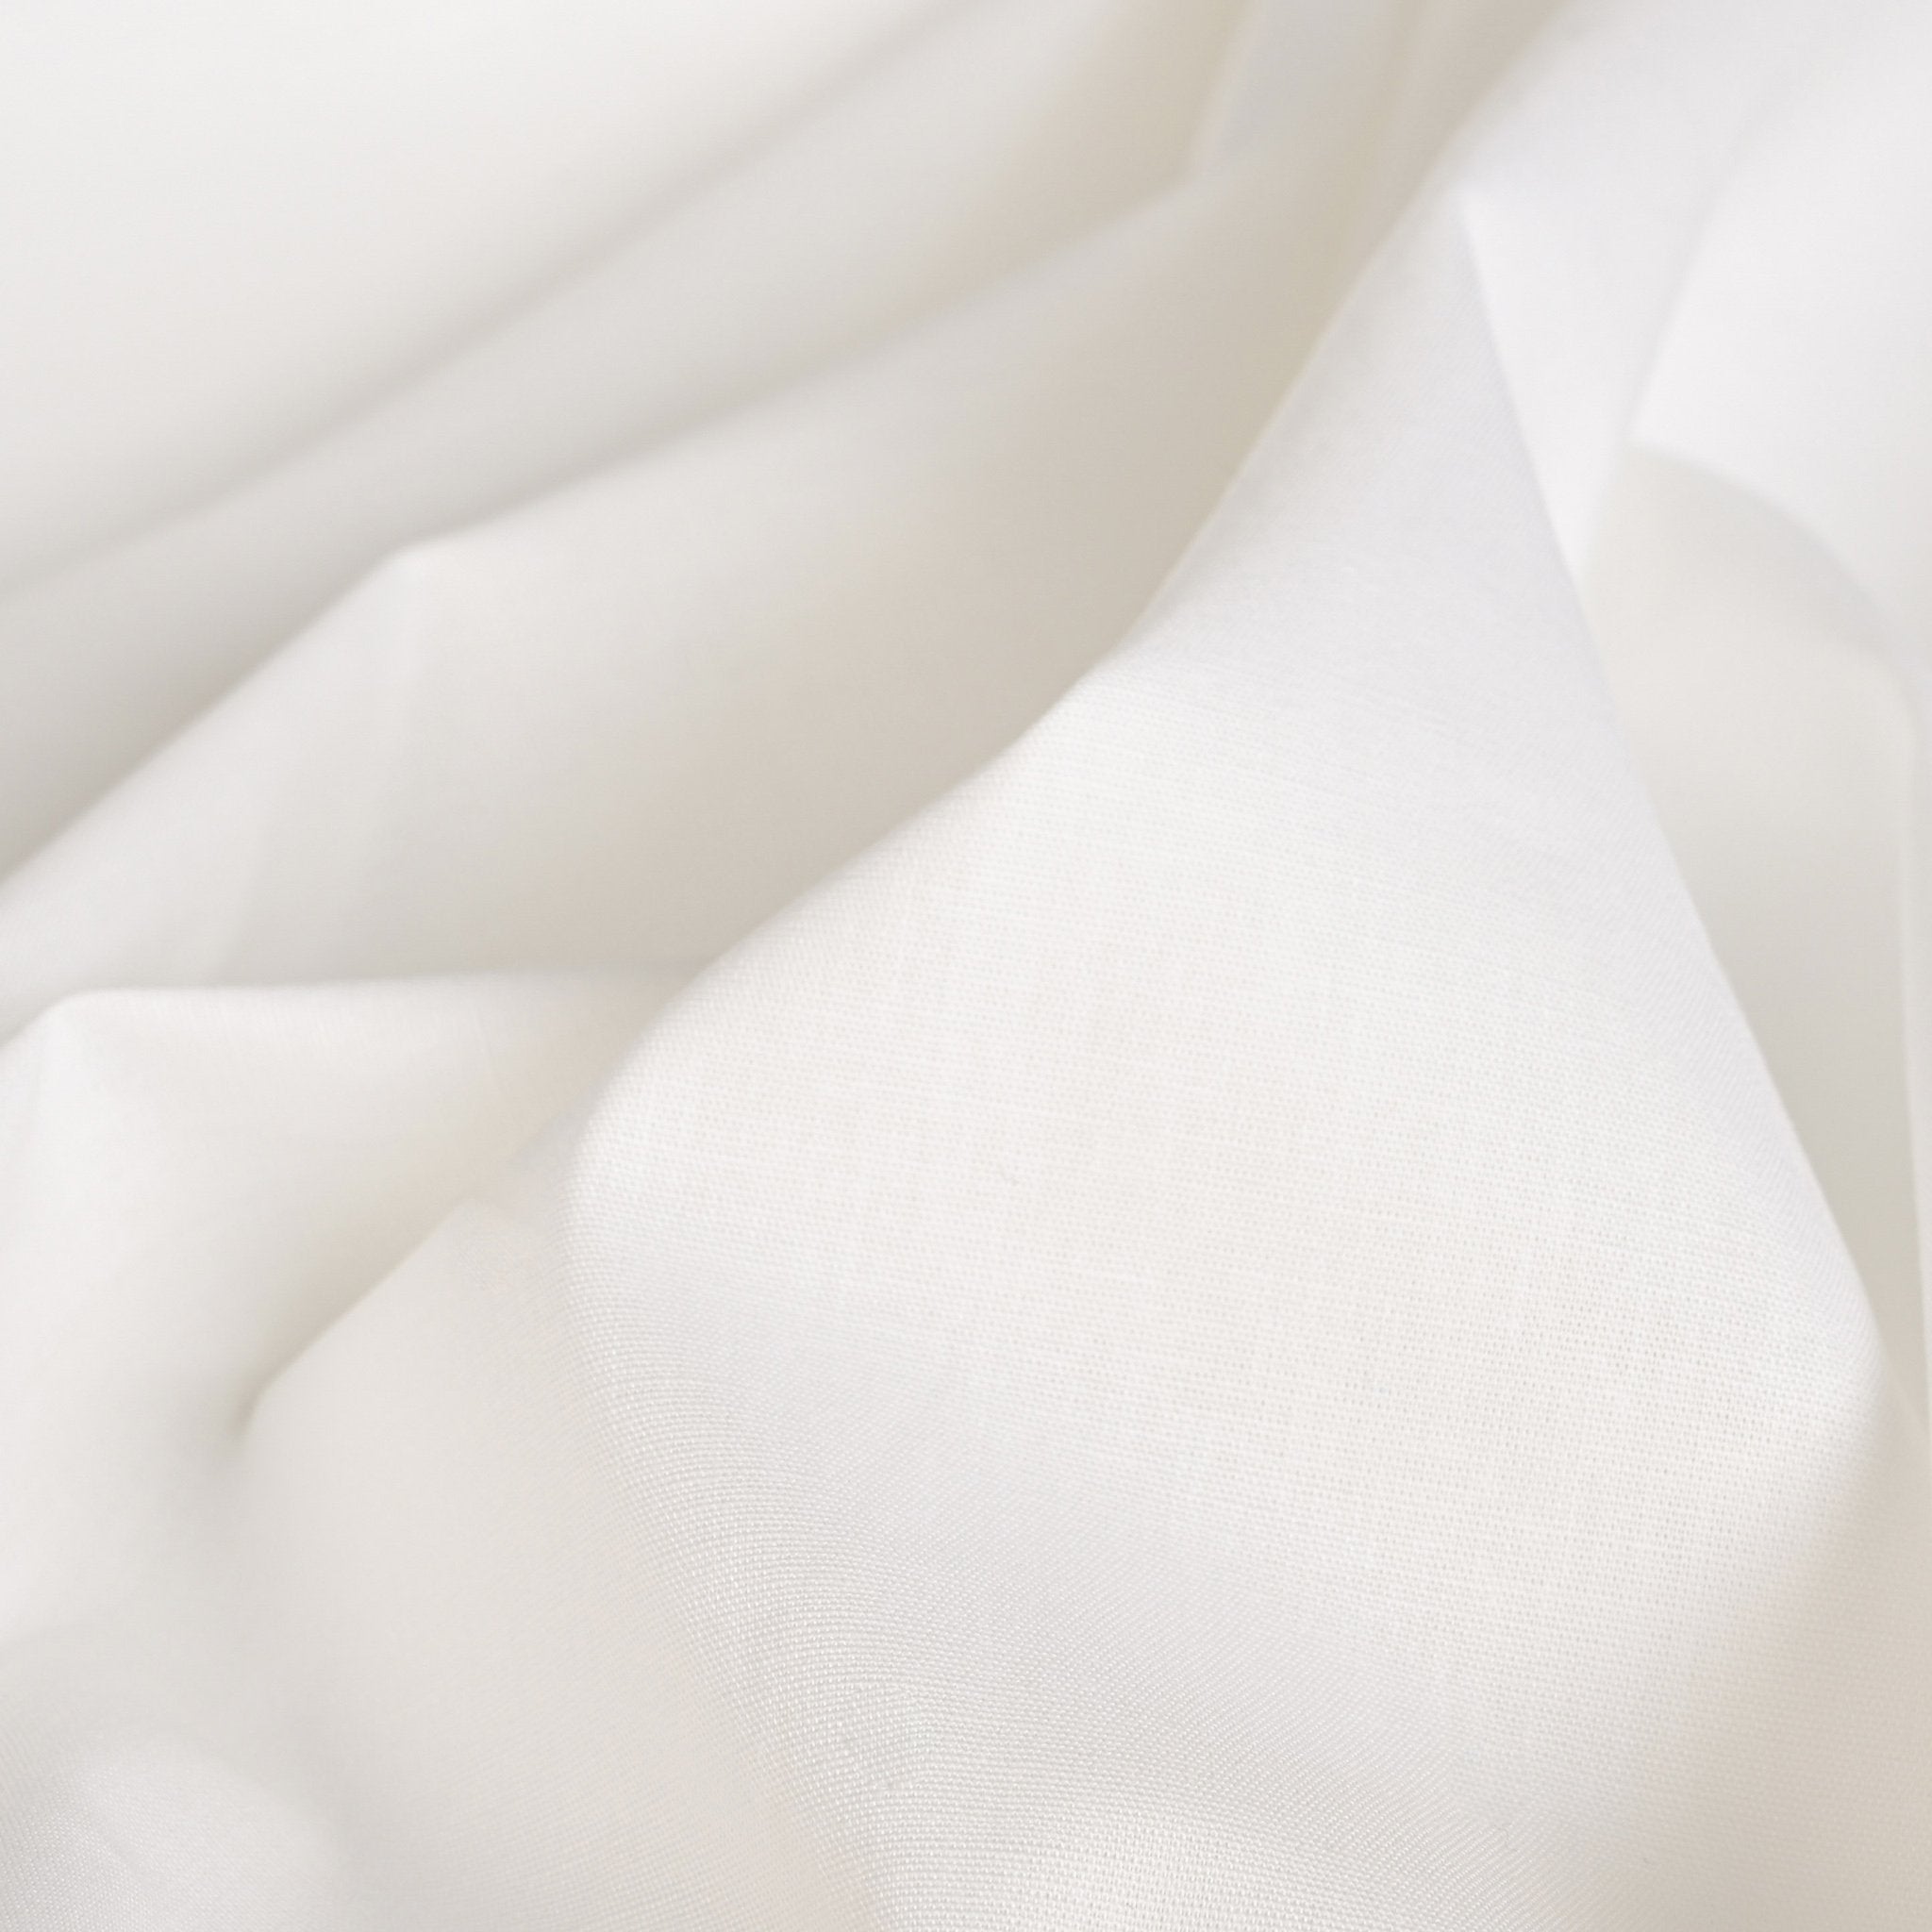 White Poplin Fabric 96477